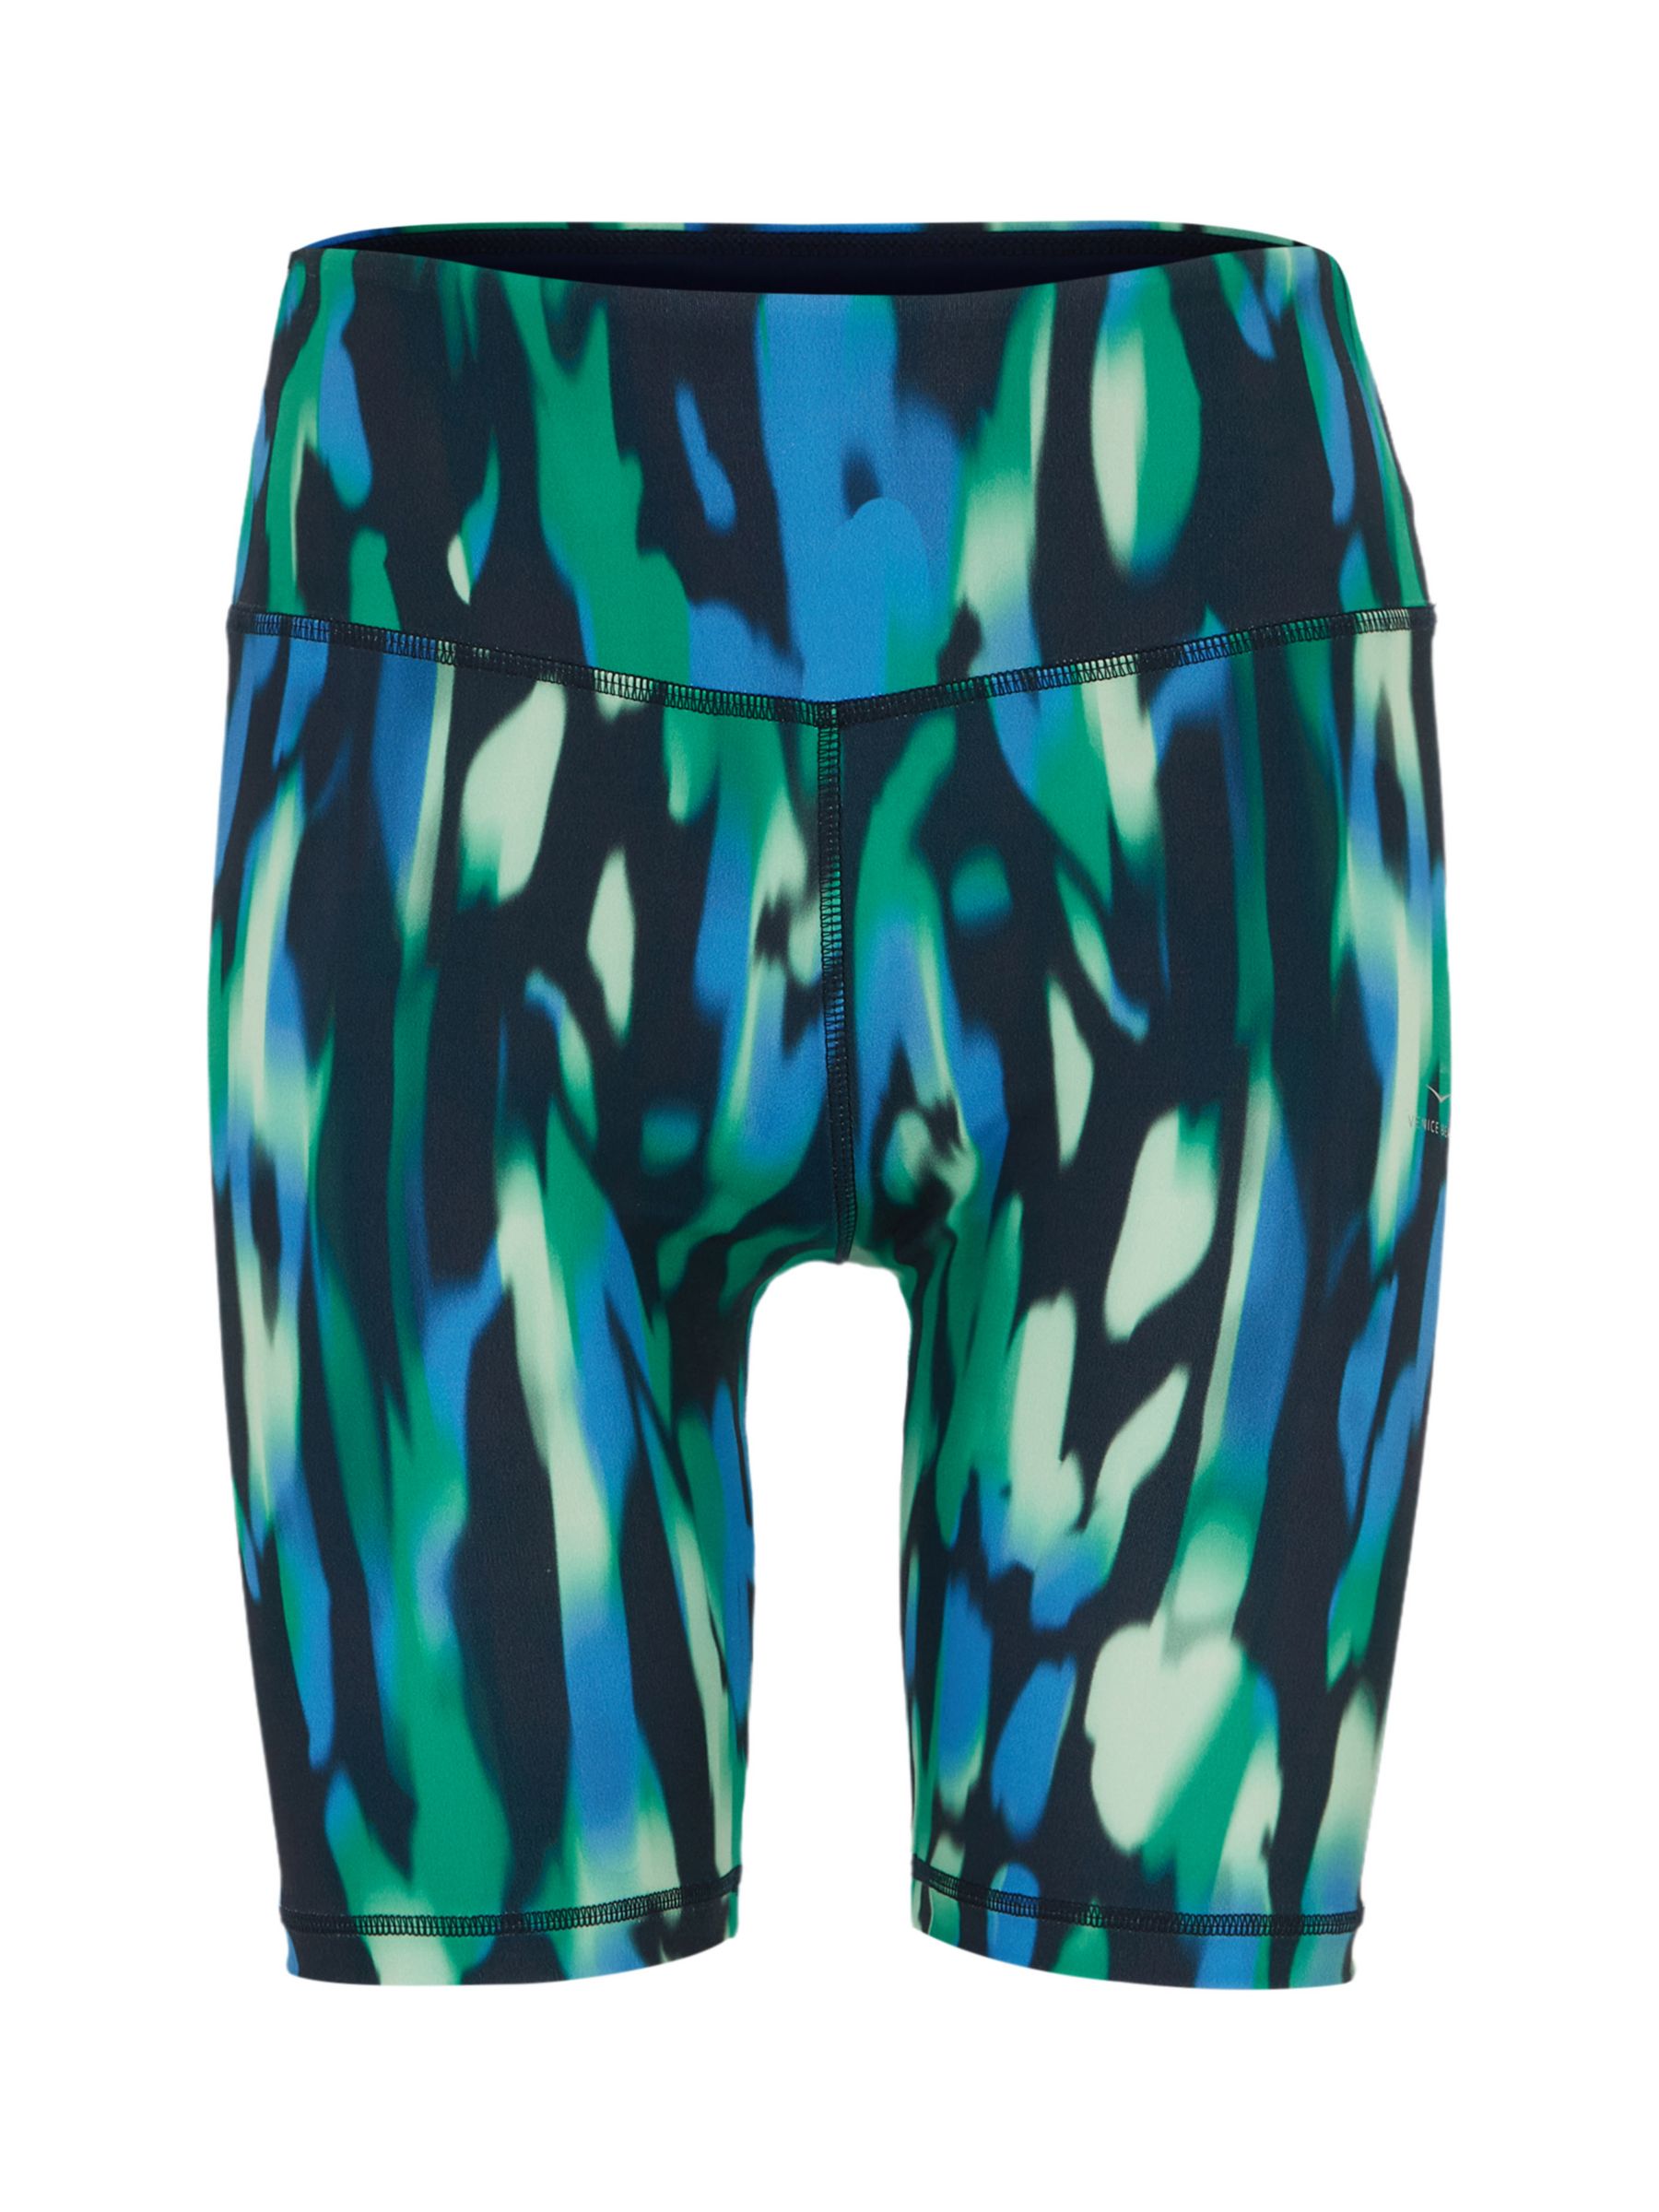 Venice Beach Beca Shorts, Green/Multi, XS